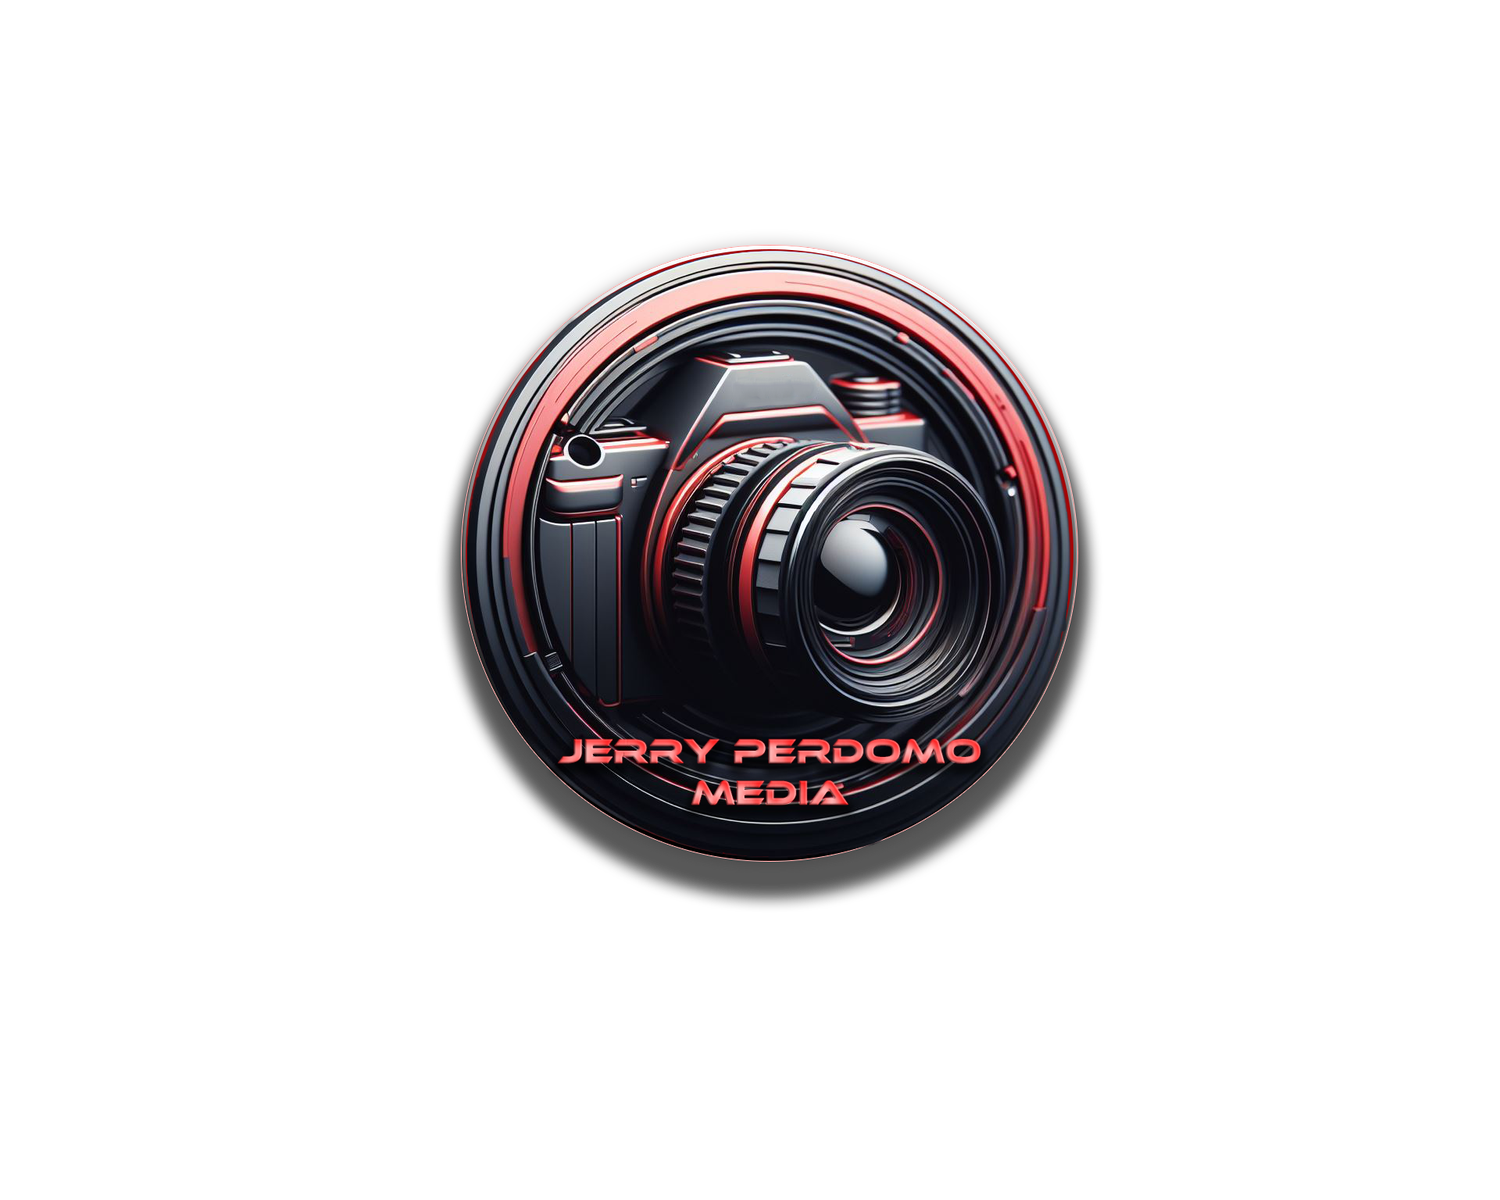 Jerry Perdomo Media